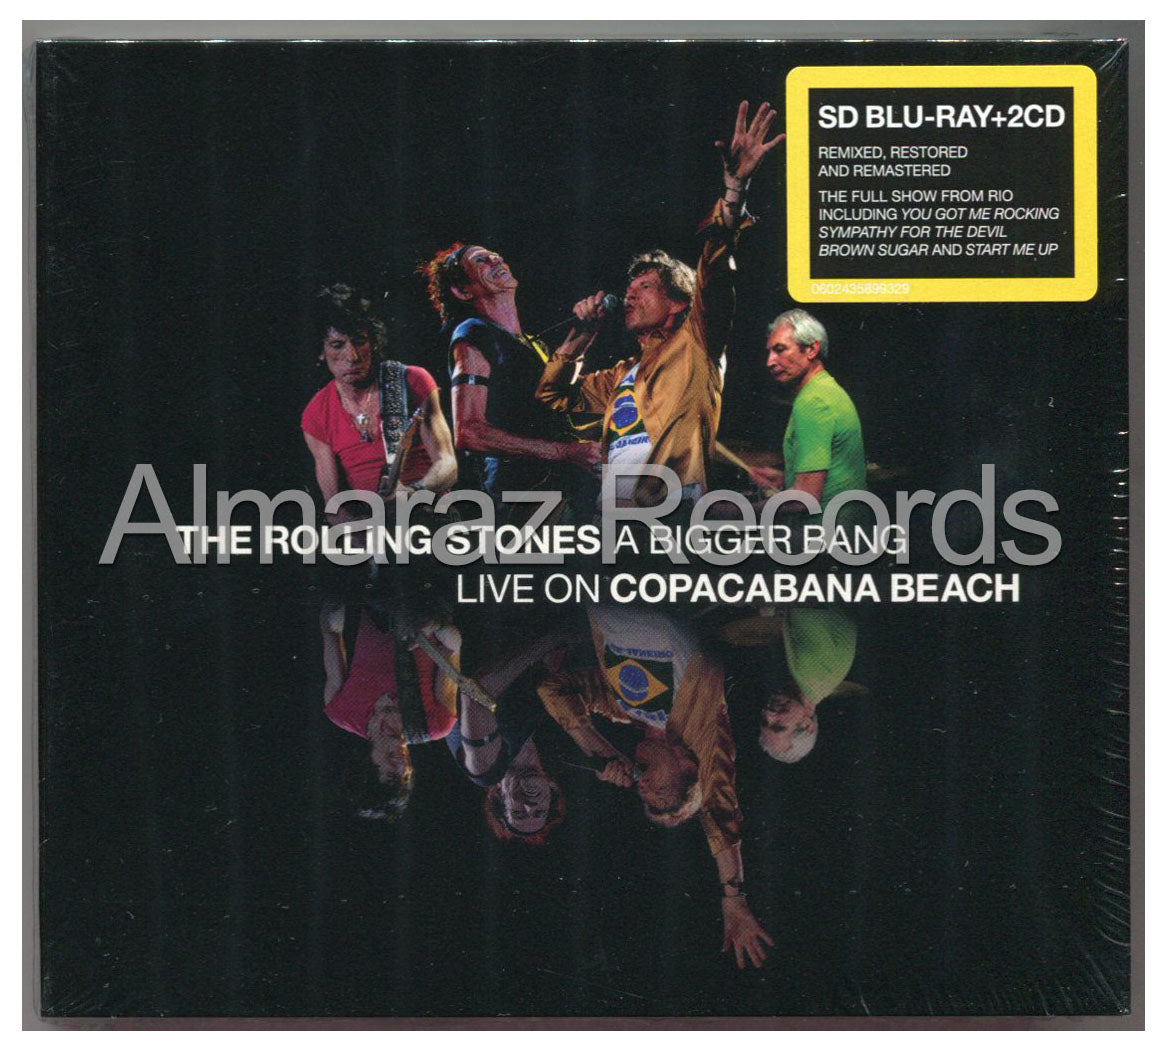 The Rolling Stones A Bigger Bang Live On Copacabana Beach 2CD+Blu-Ray [Importado]